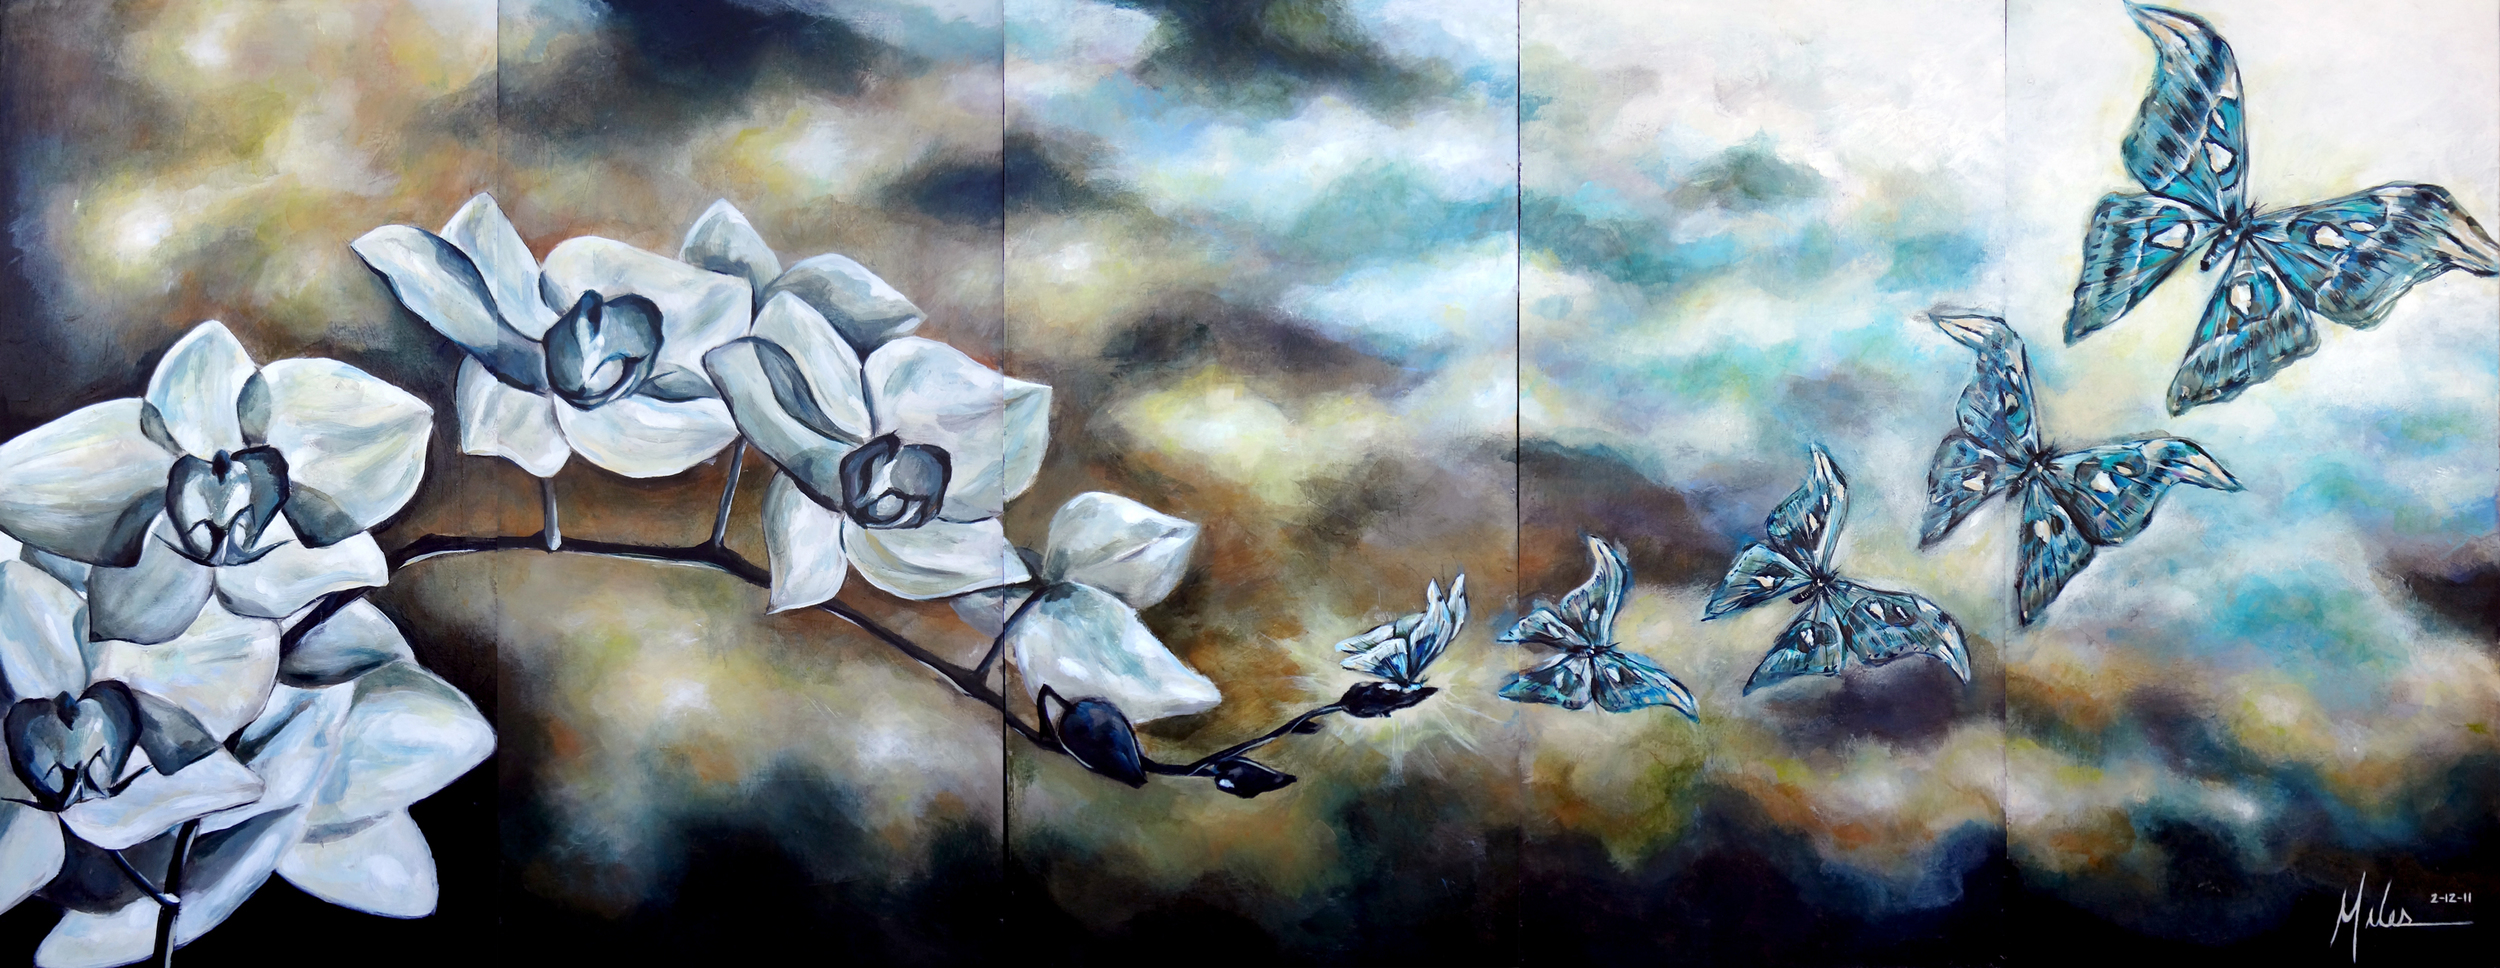  “Metamorphosis V”  acrylic on canvas  36” x 90”  2011 